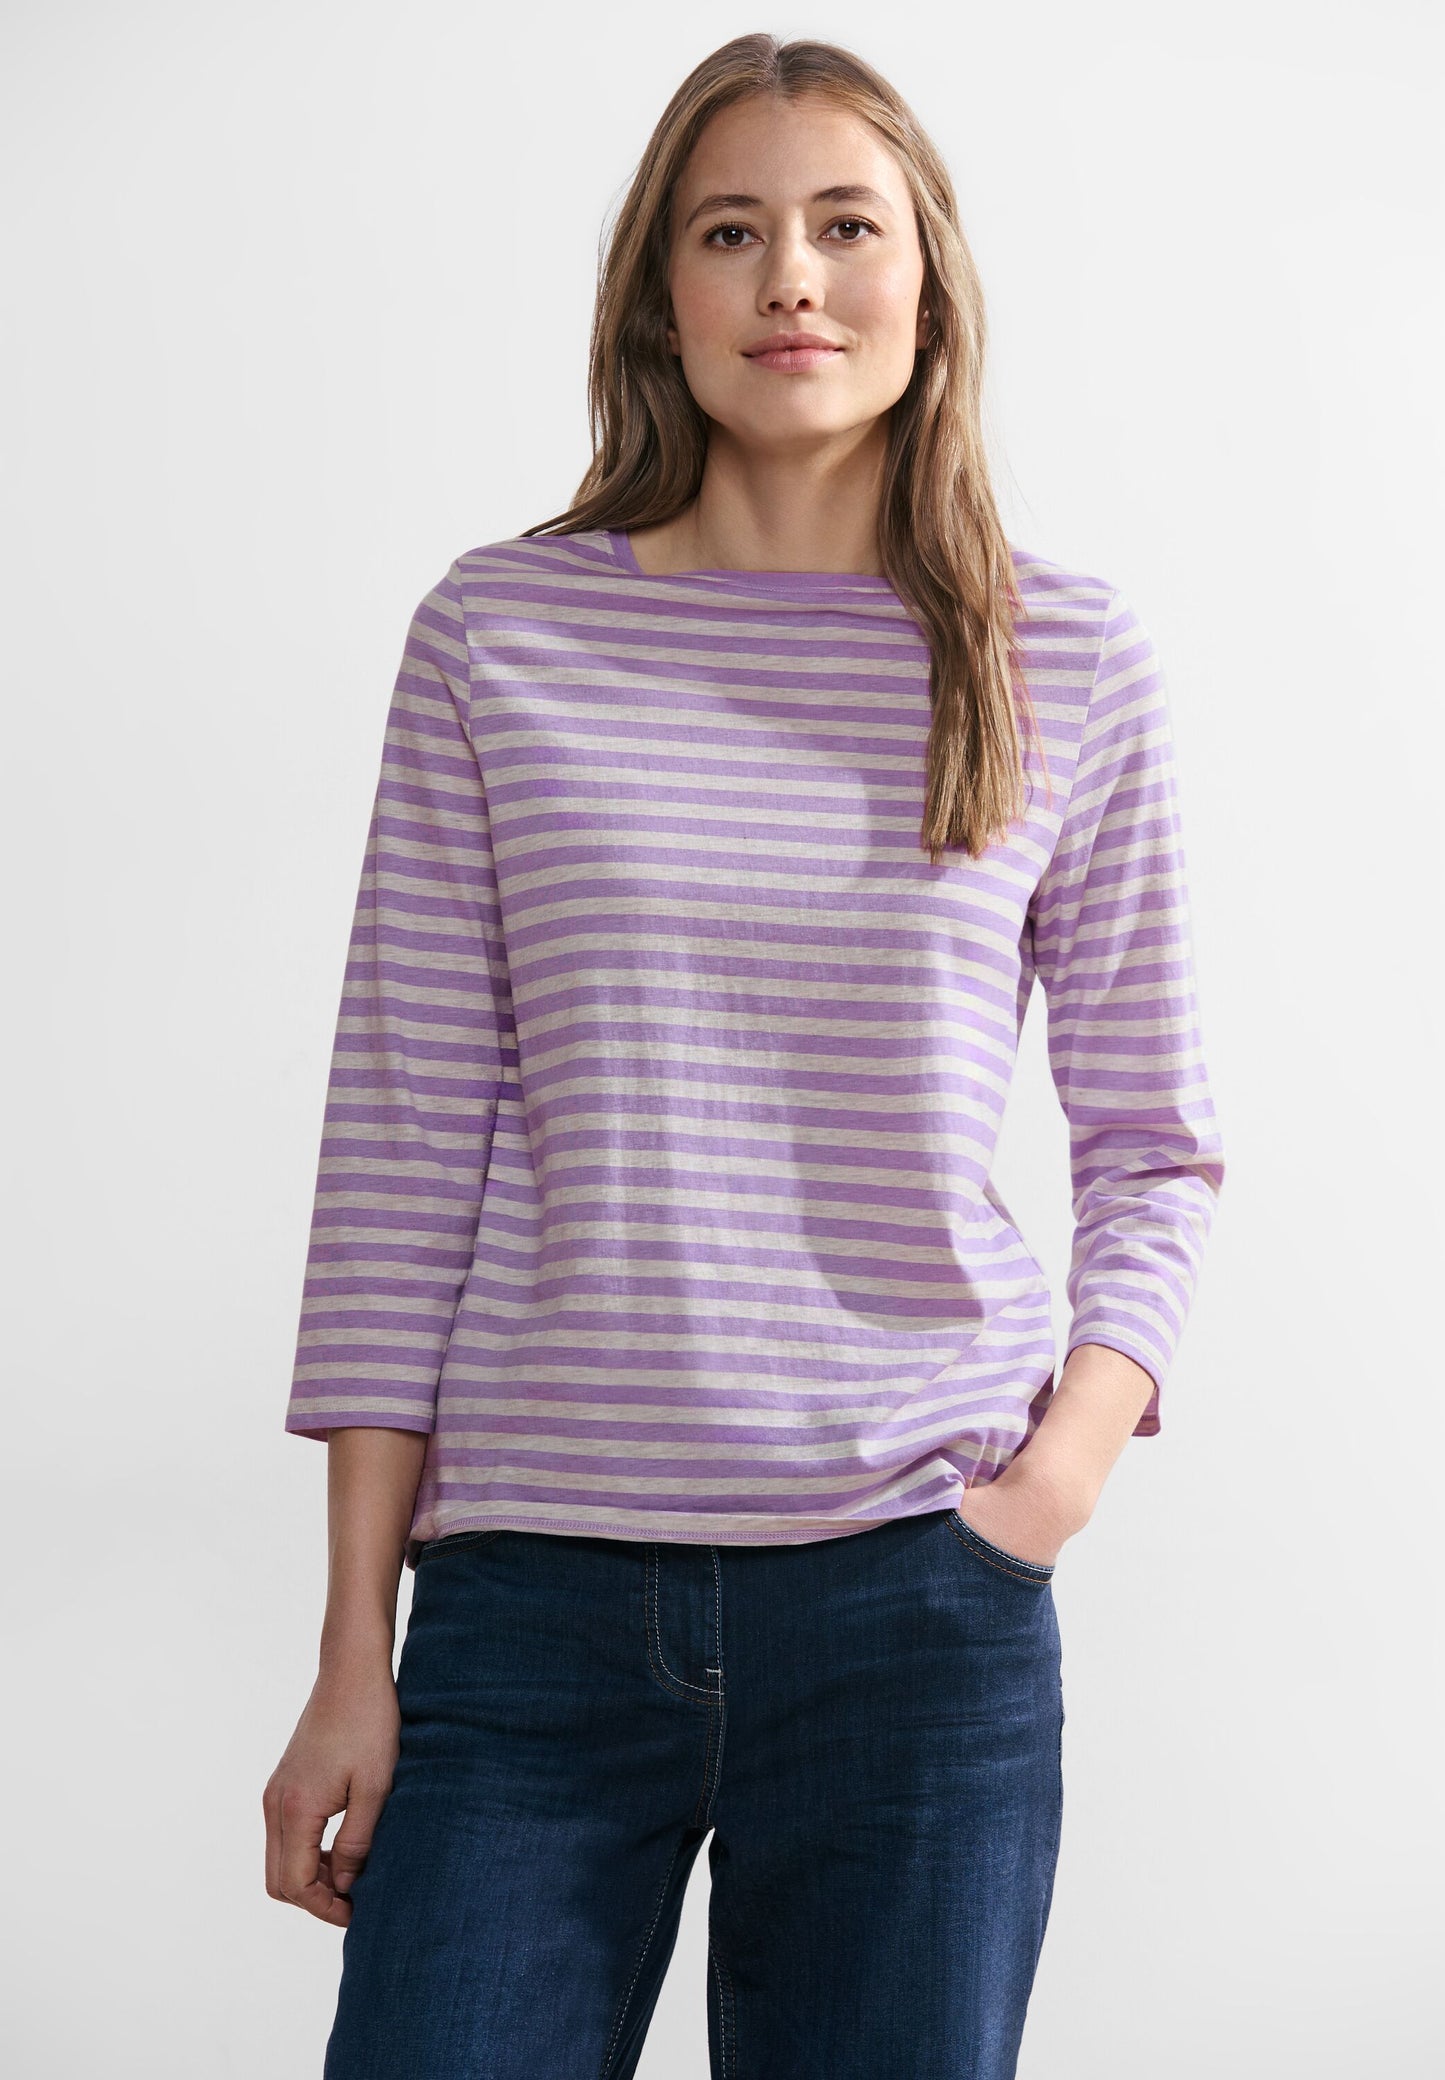 CECIL - Shirt mit Streifen - sporty lilac